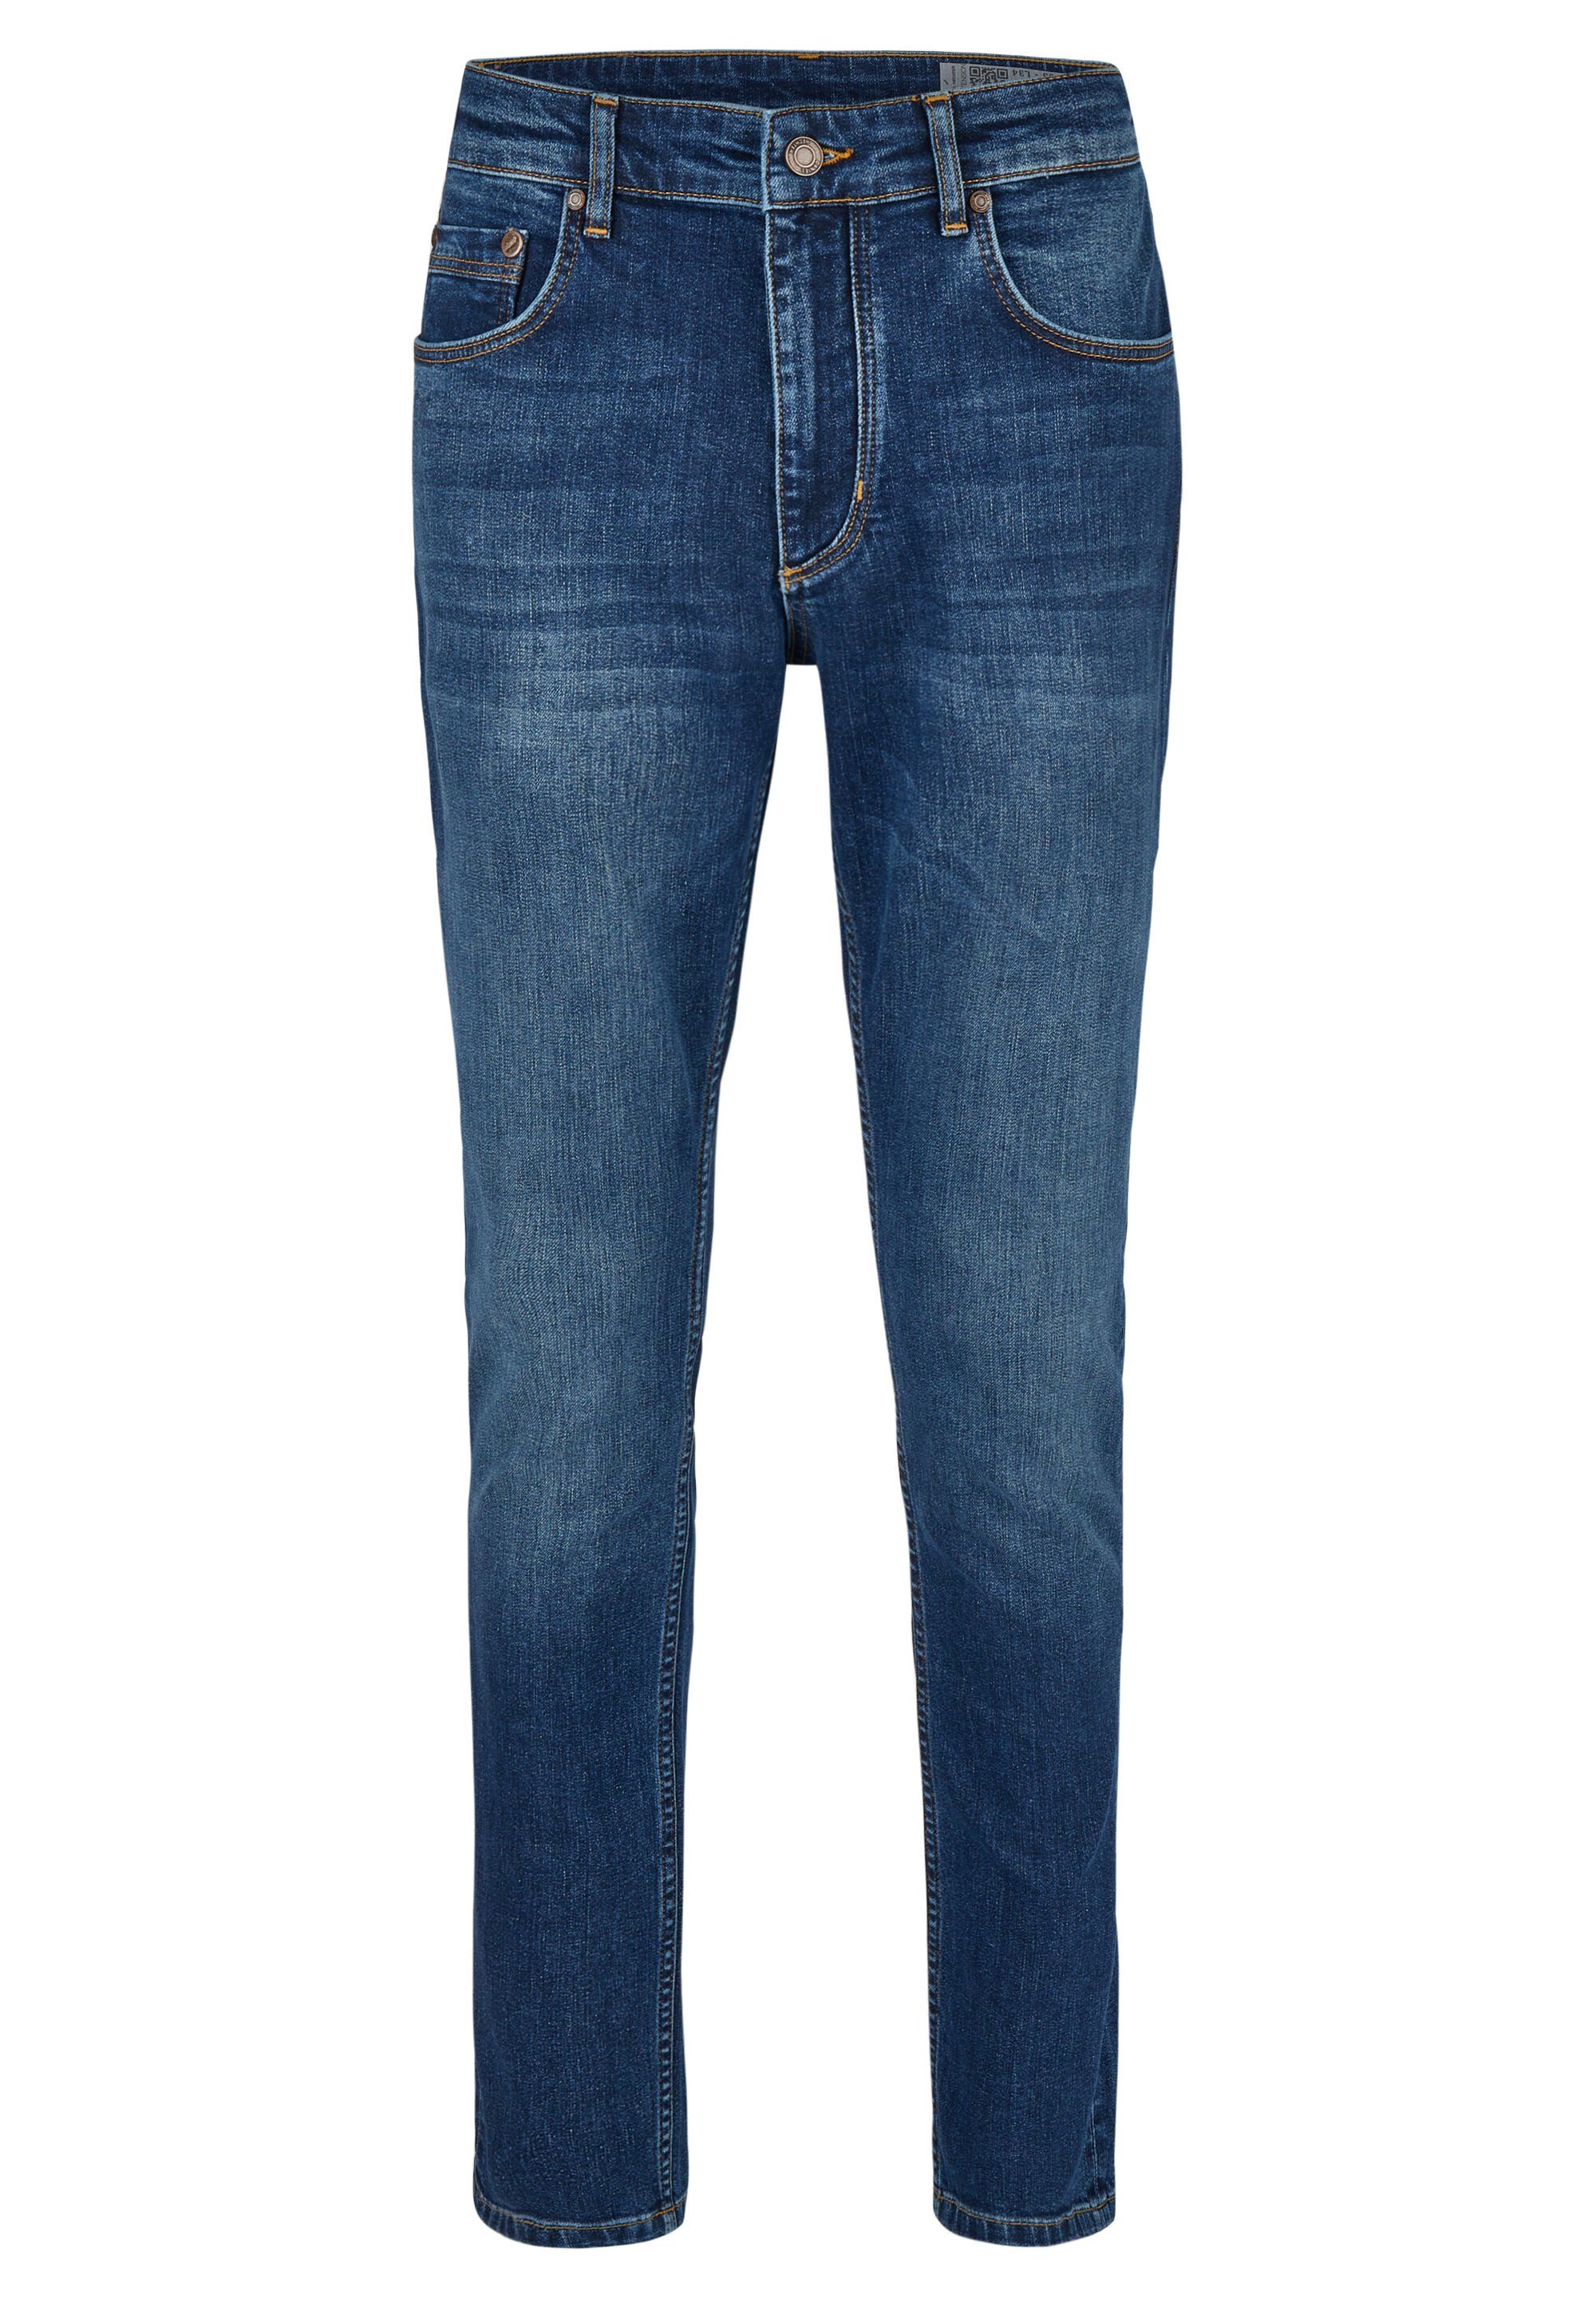 Unimuster HECHTER 5-Pocket-Jeans blue dark PARIS